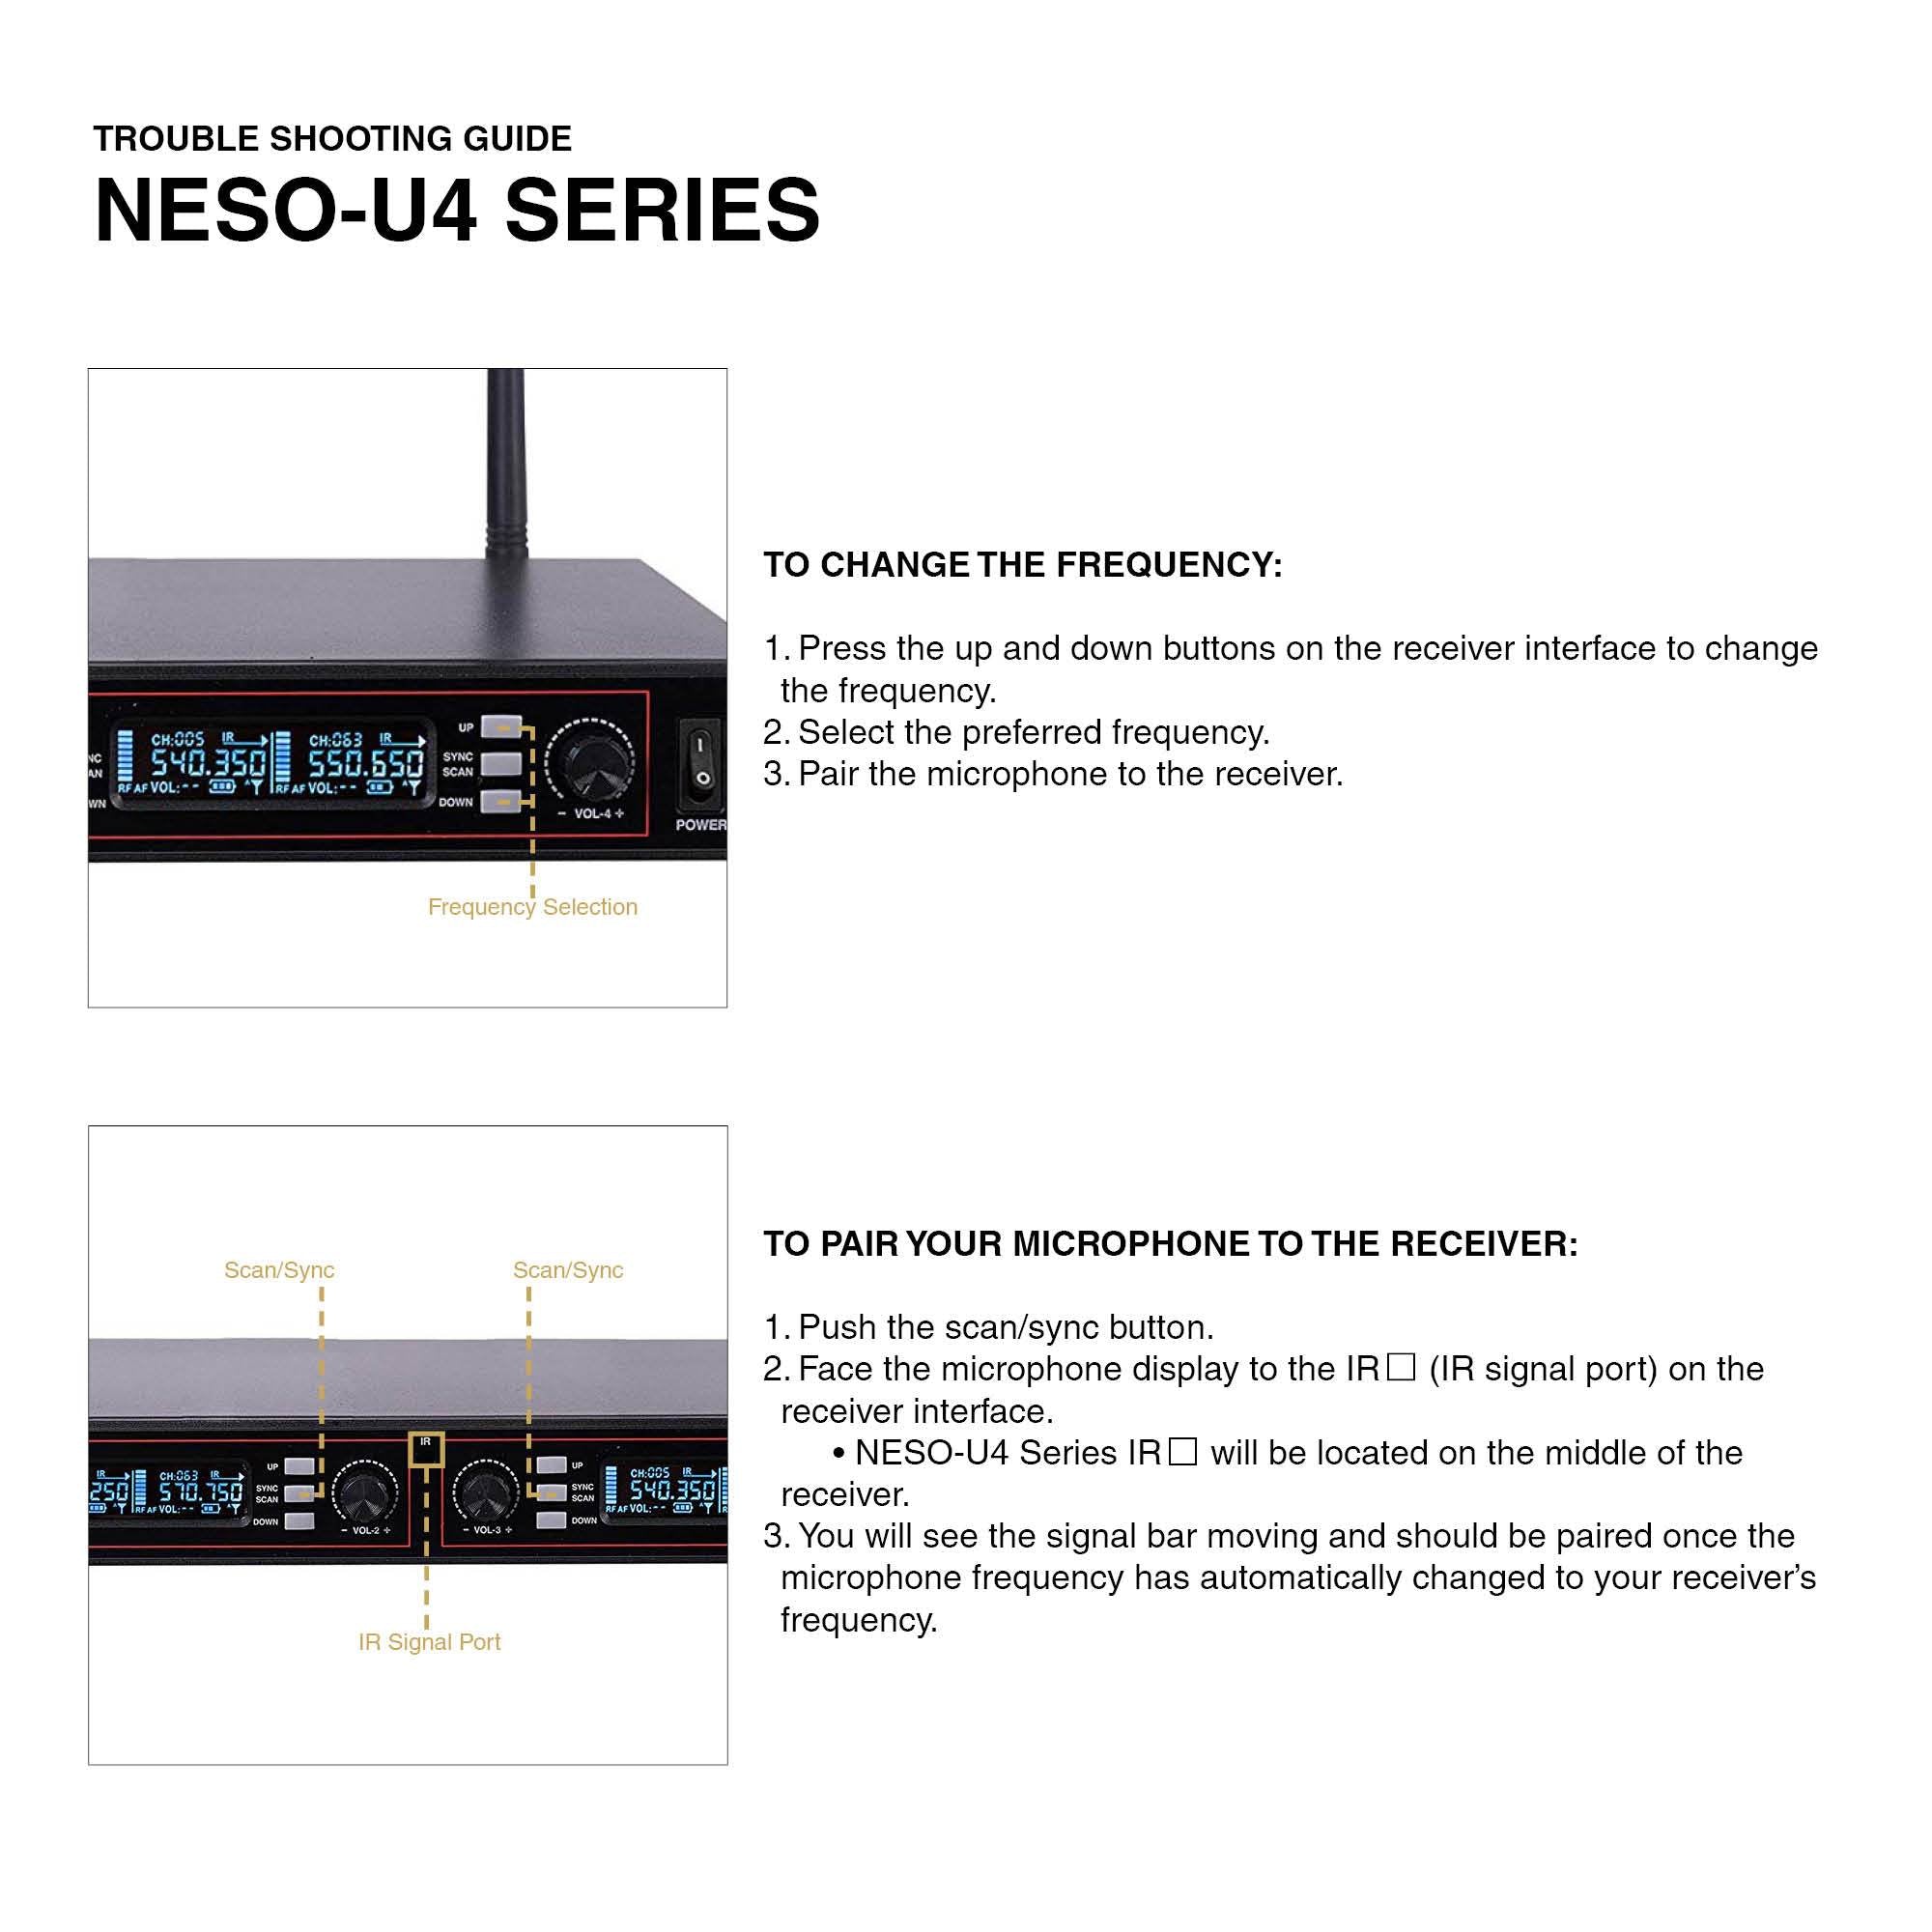 SWM26-U2 Series Metal 200 Channels UHF Wireless Microphone System – Sound  Town